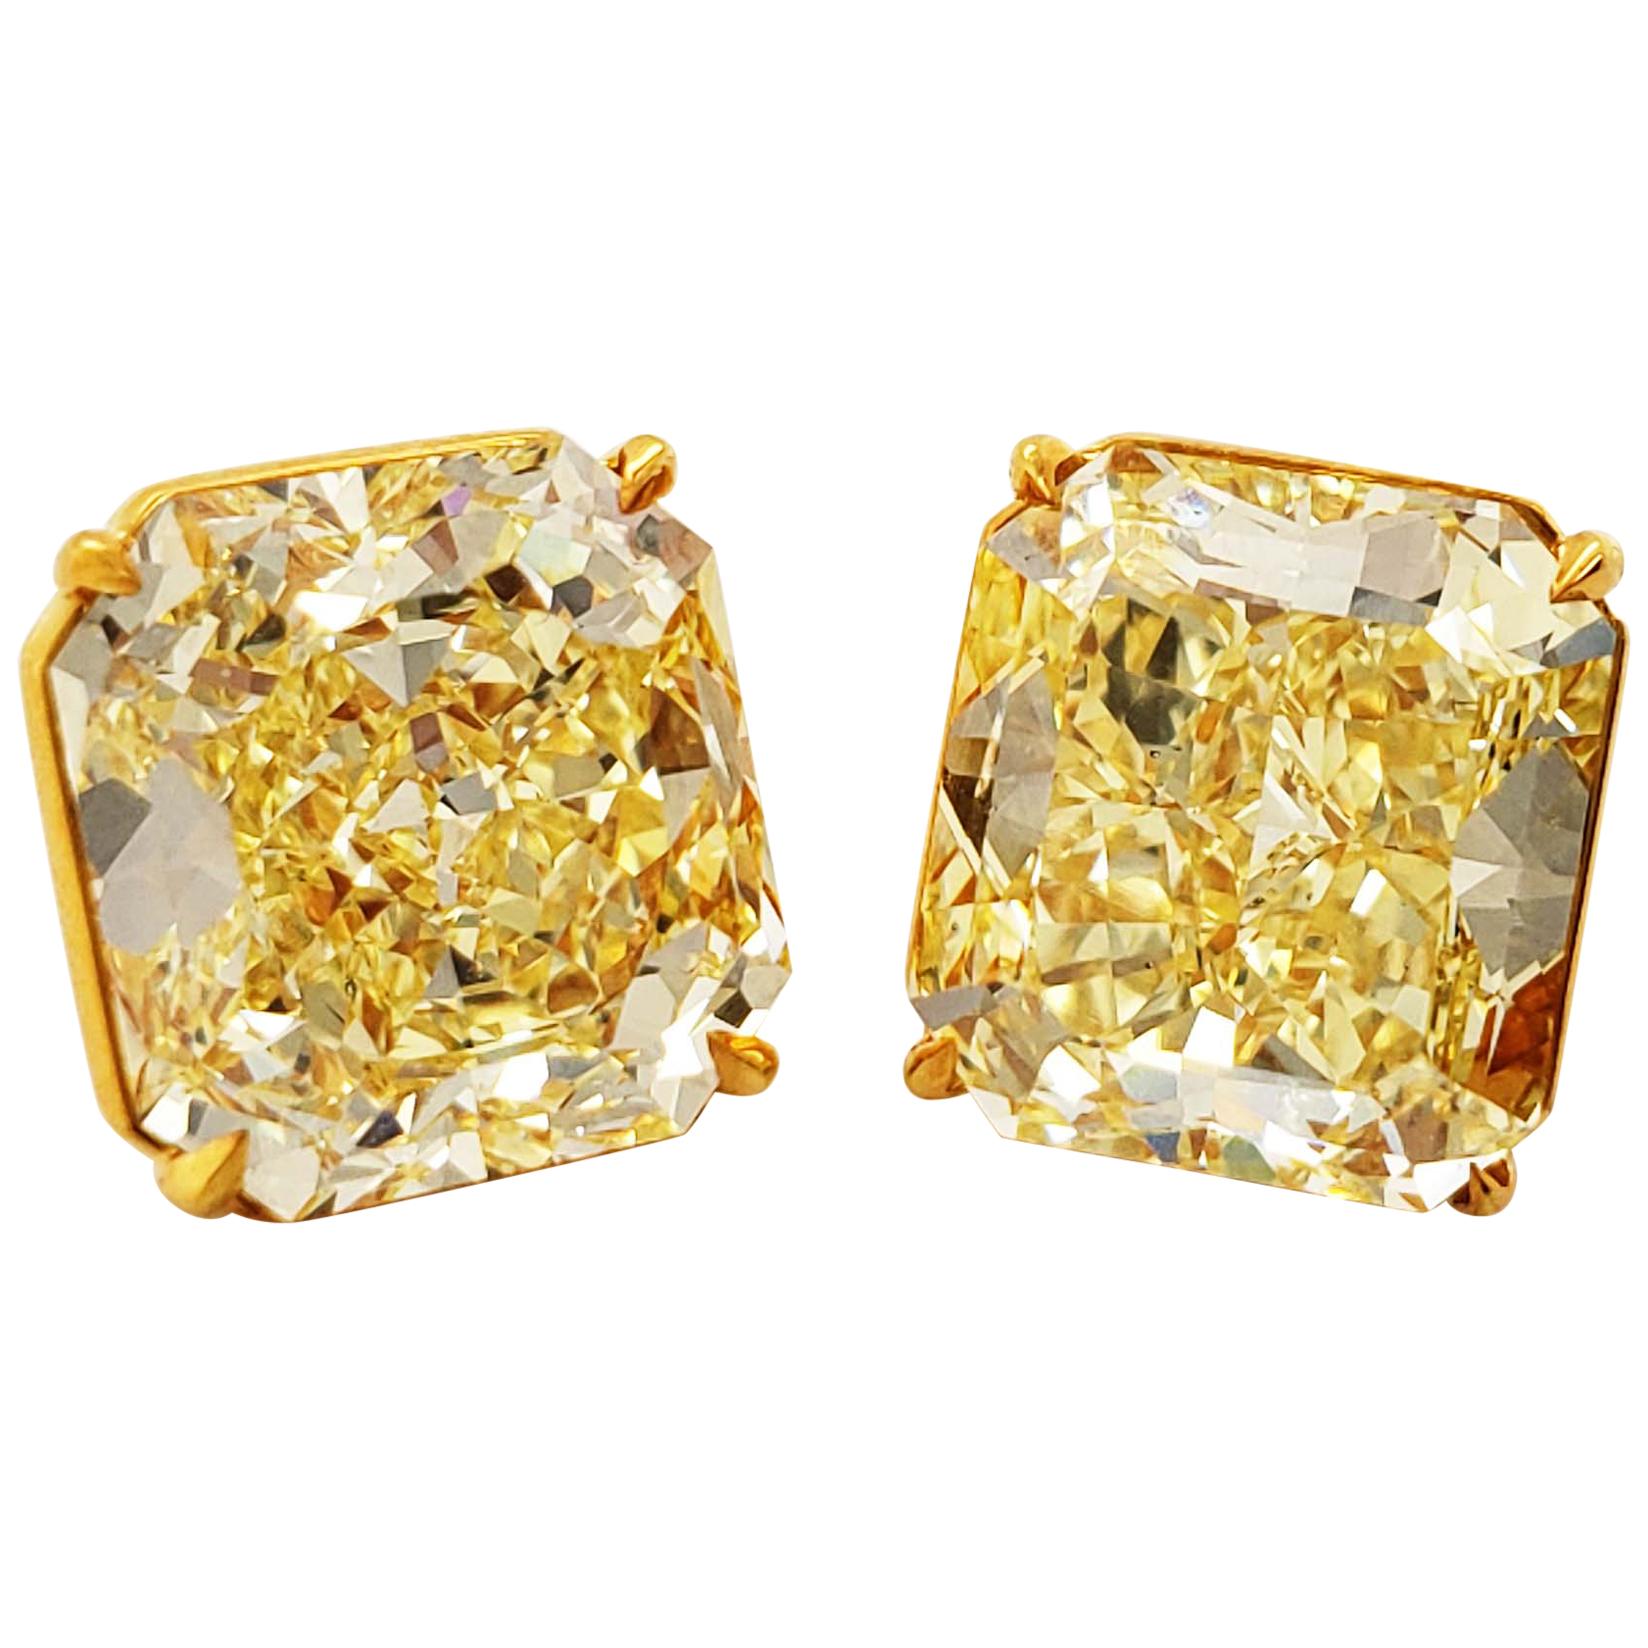 Scarselli Stud Earrings 7 carat Yellow Diamond each set in 18k Yellow Gold